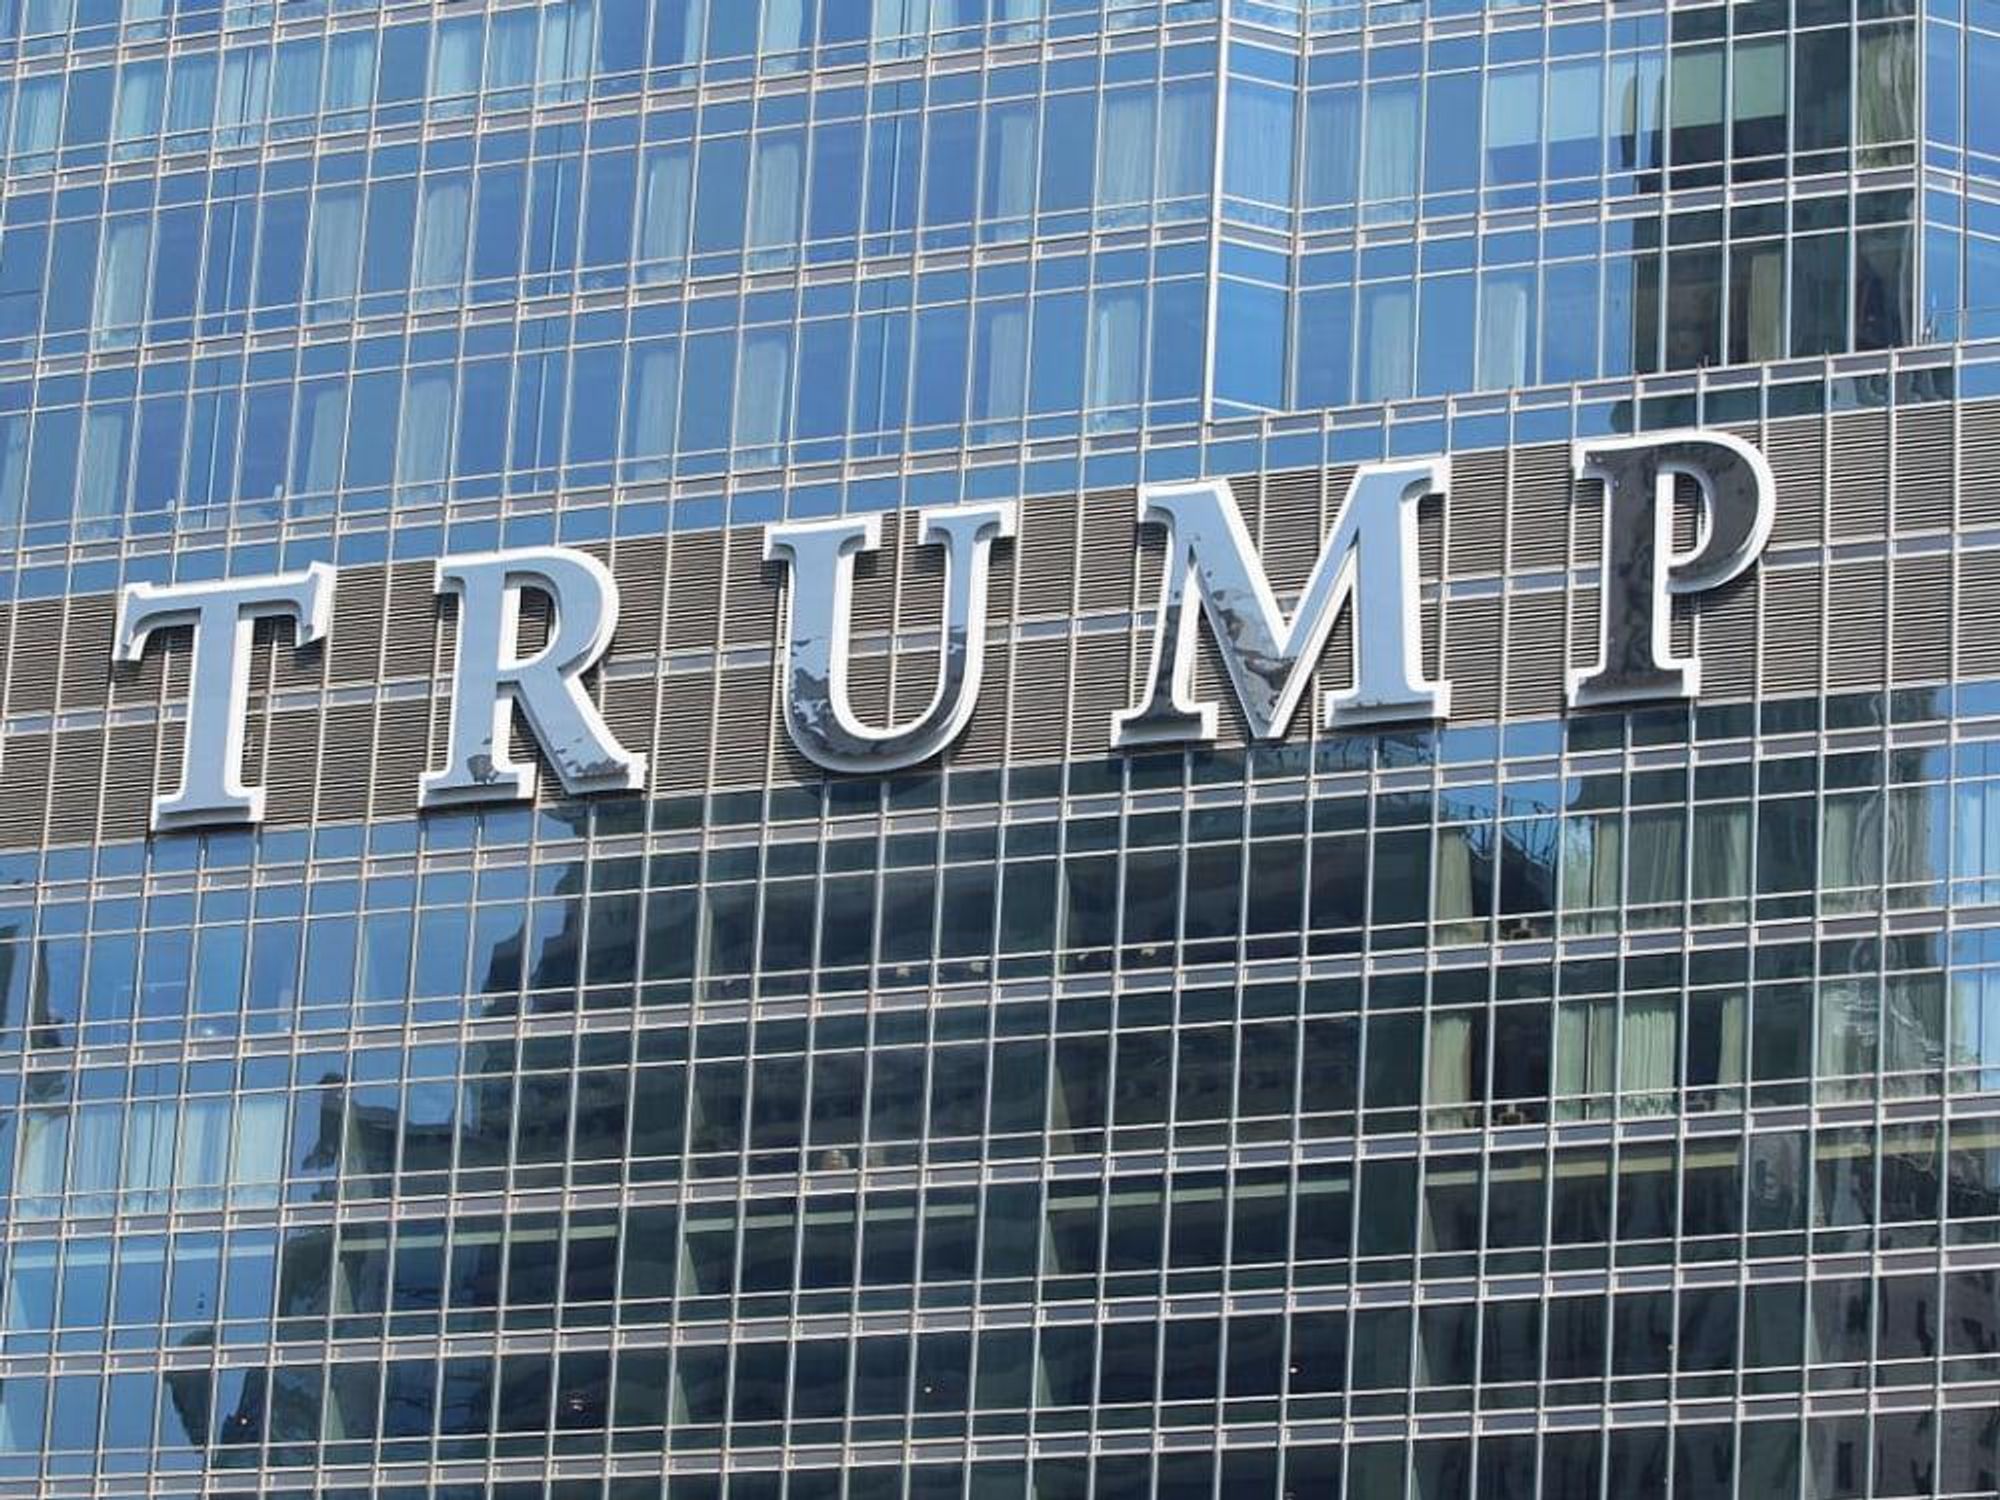 Trump hotel sign